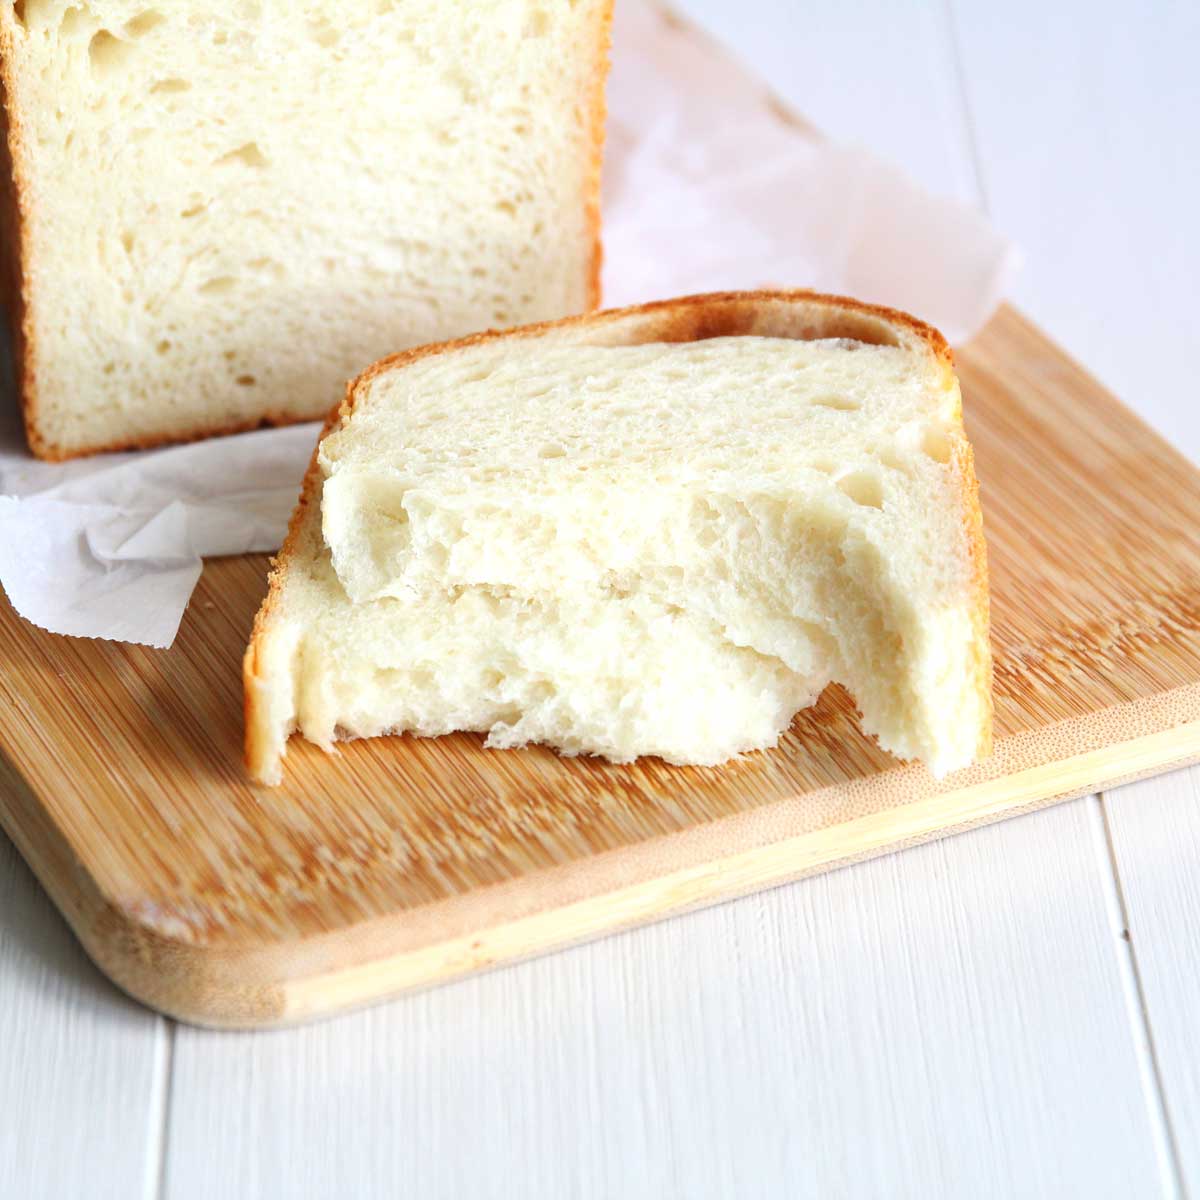 High Protein Cottage Cheese Yeast Bread (Easy Sandwich Bread Recipe) - Greek Yogurt Yeast Bread